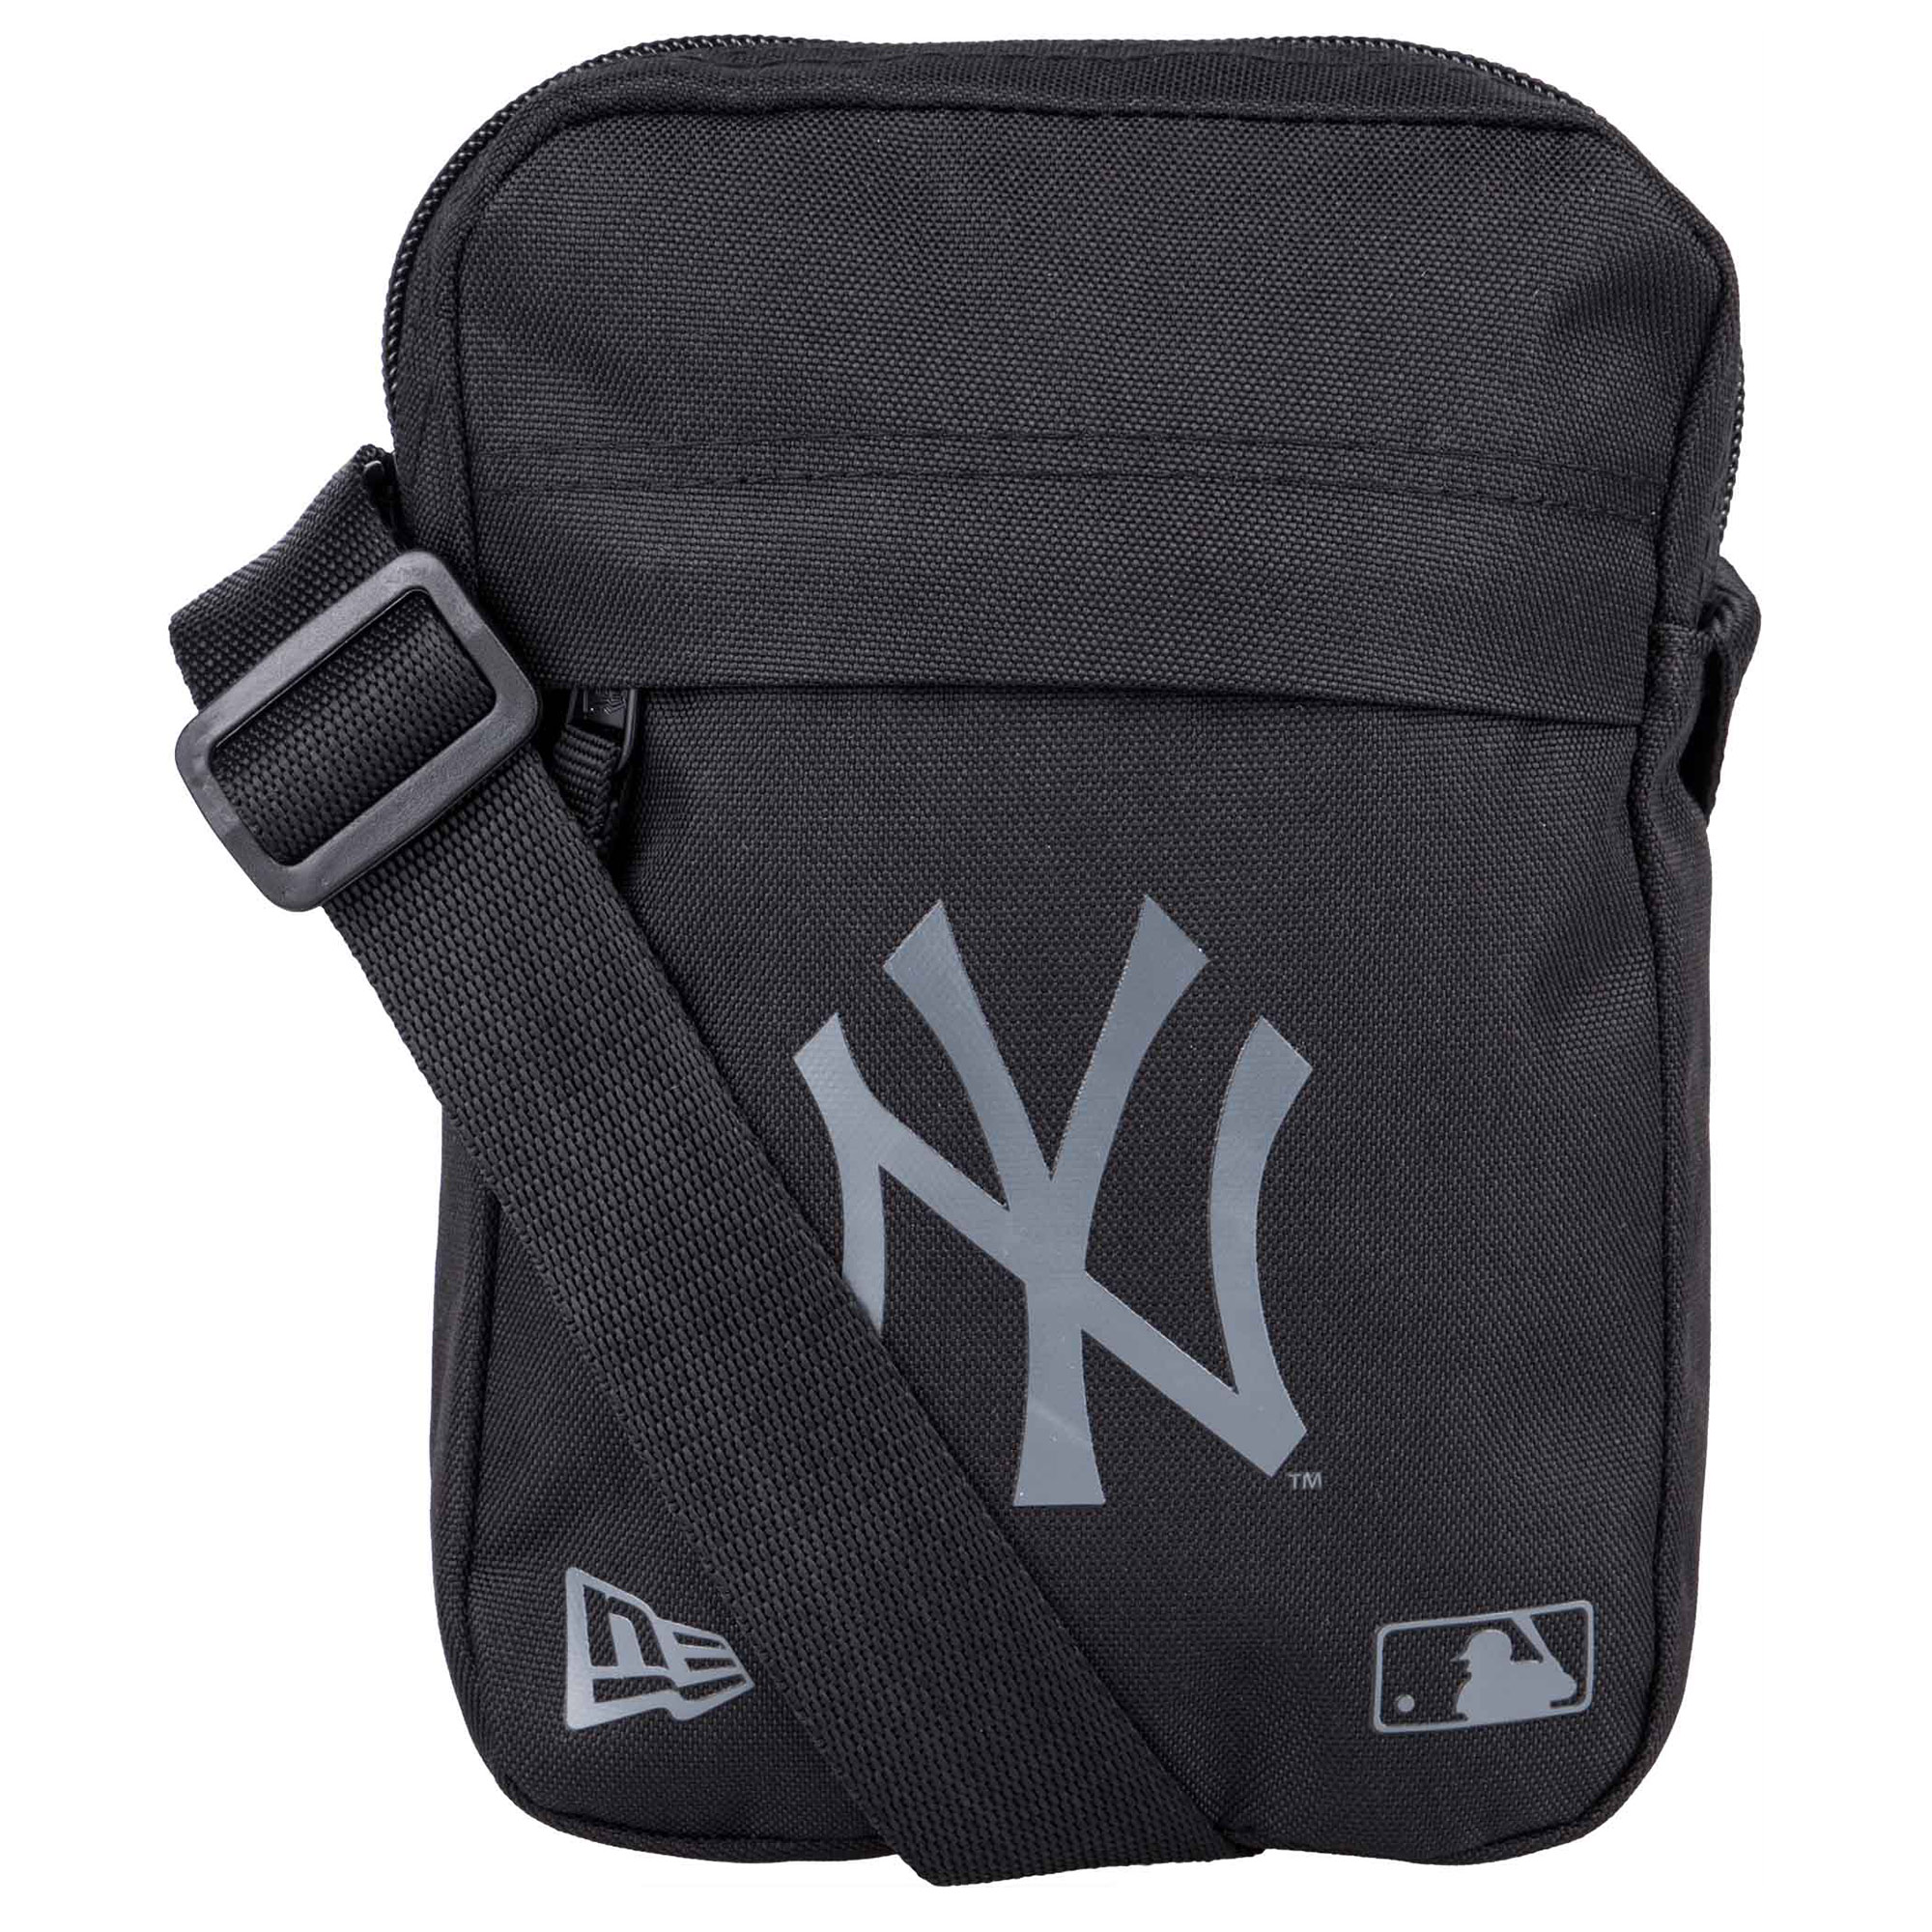 1 bag new. Сумка New era MLB. Сумка MLB NY. Сумка New York Yankees. New era MLB Bag.